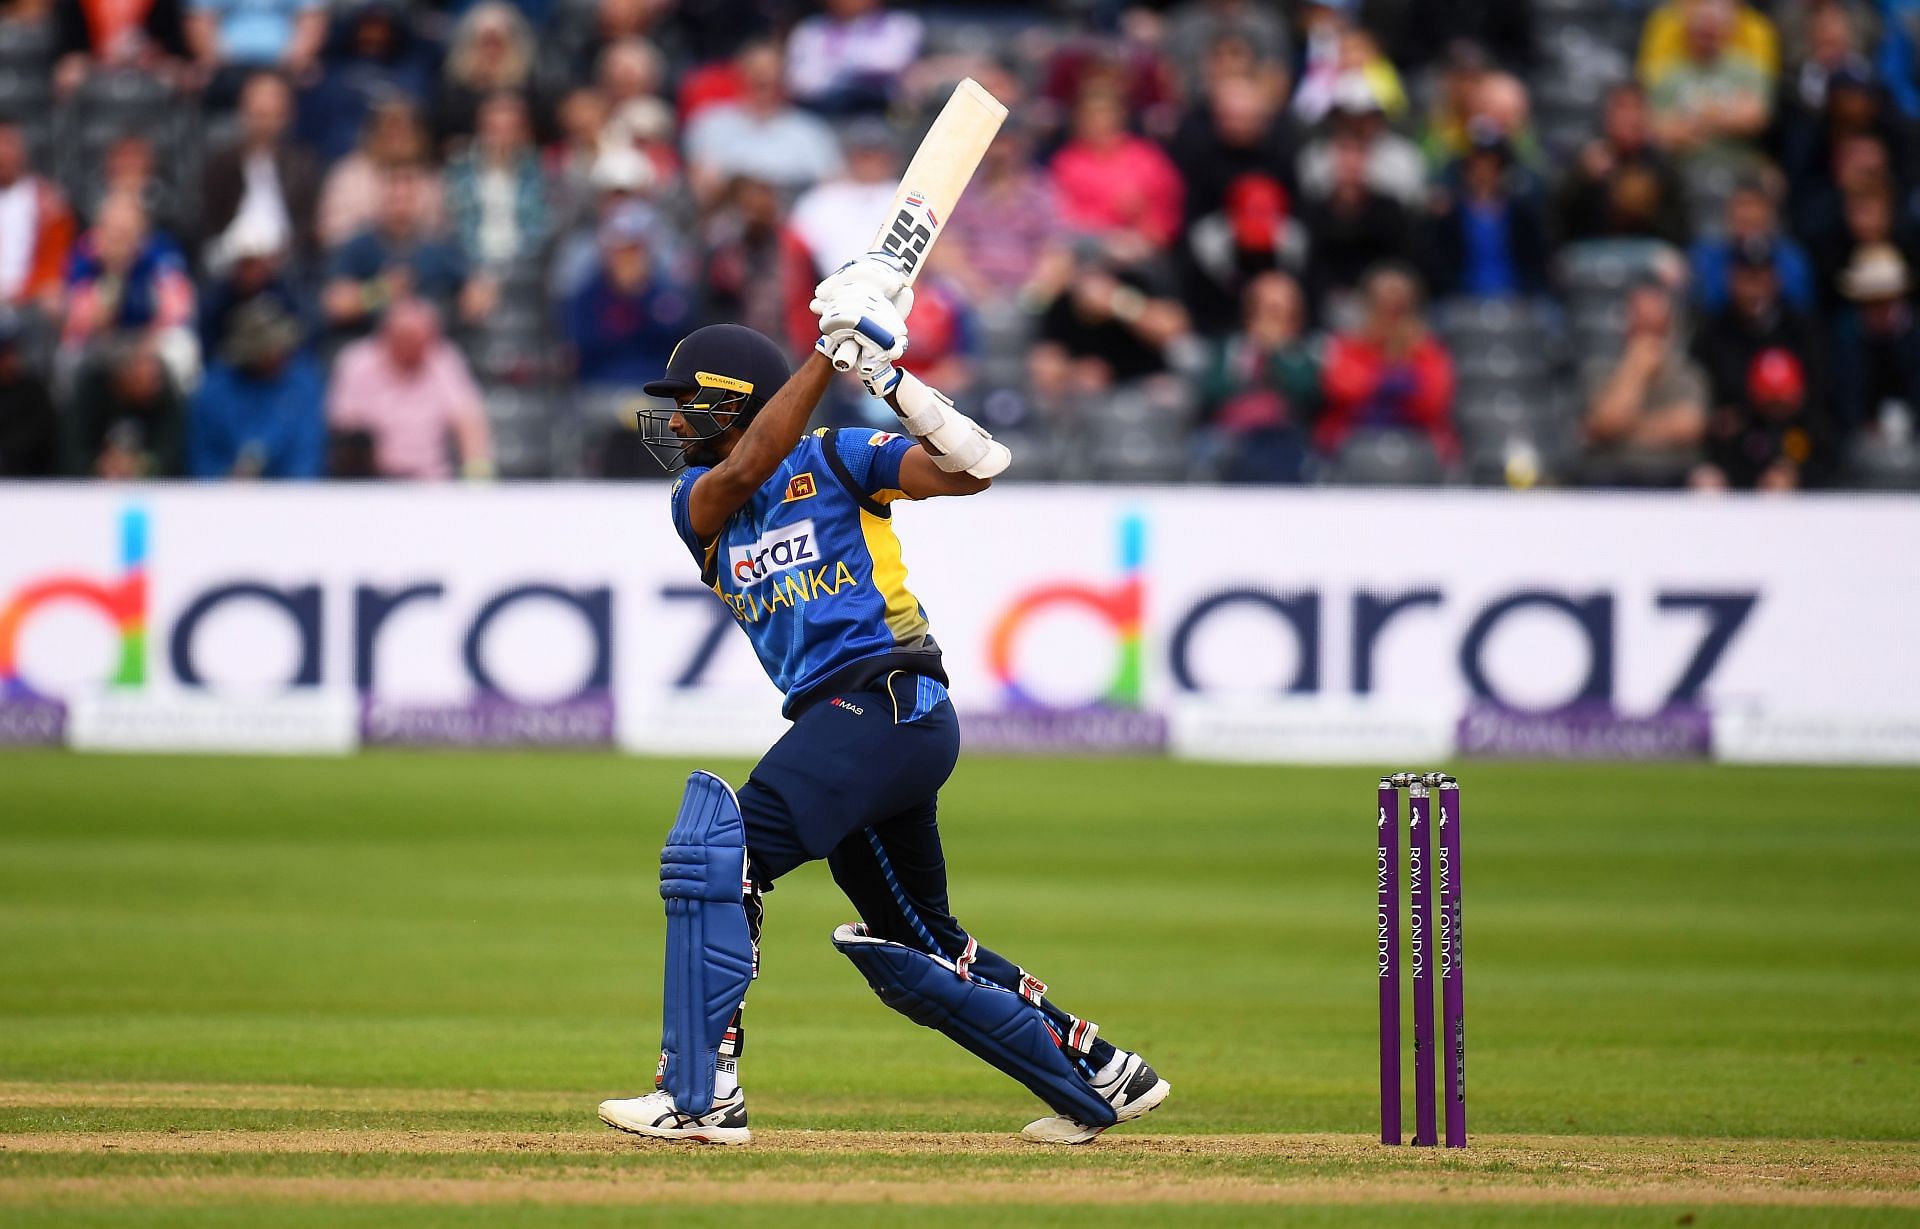 A Sri Lankan player in action during England v Sri Lanka - 3rd ODI